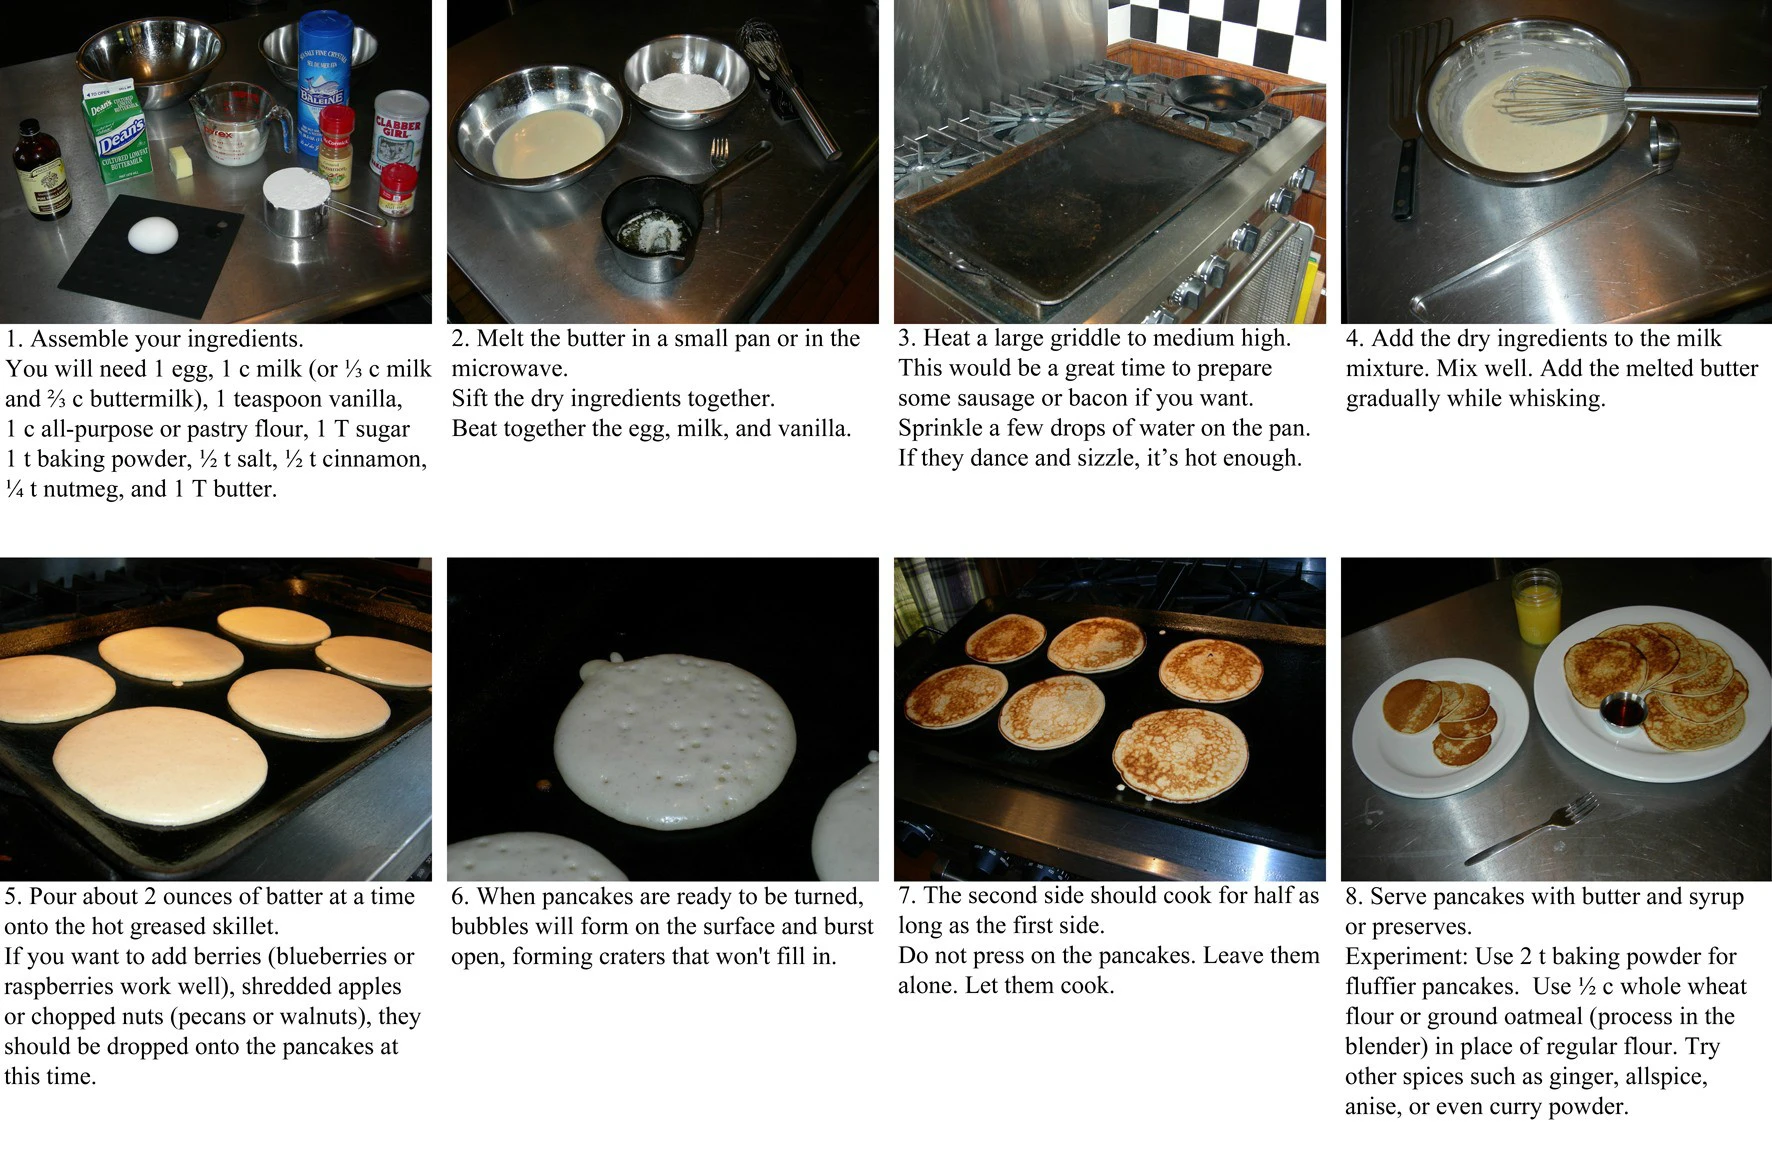 /fit/ recipe - Pancakes